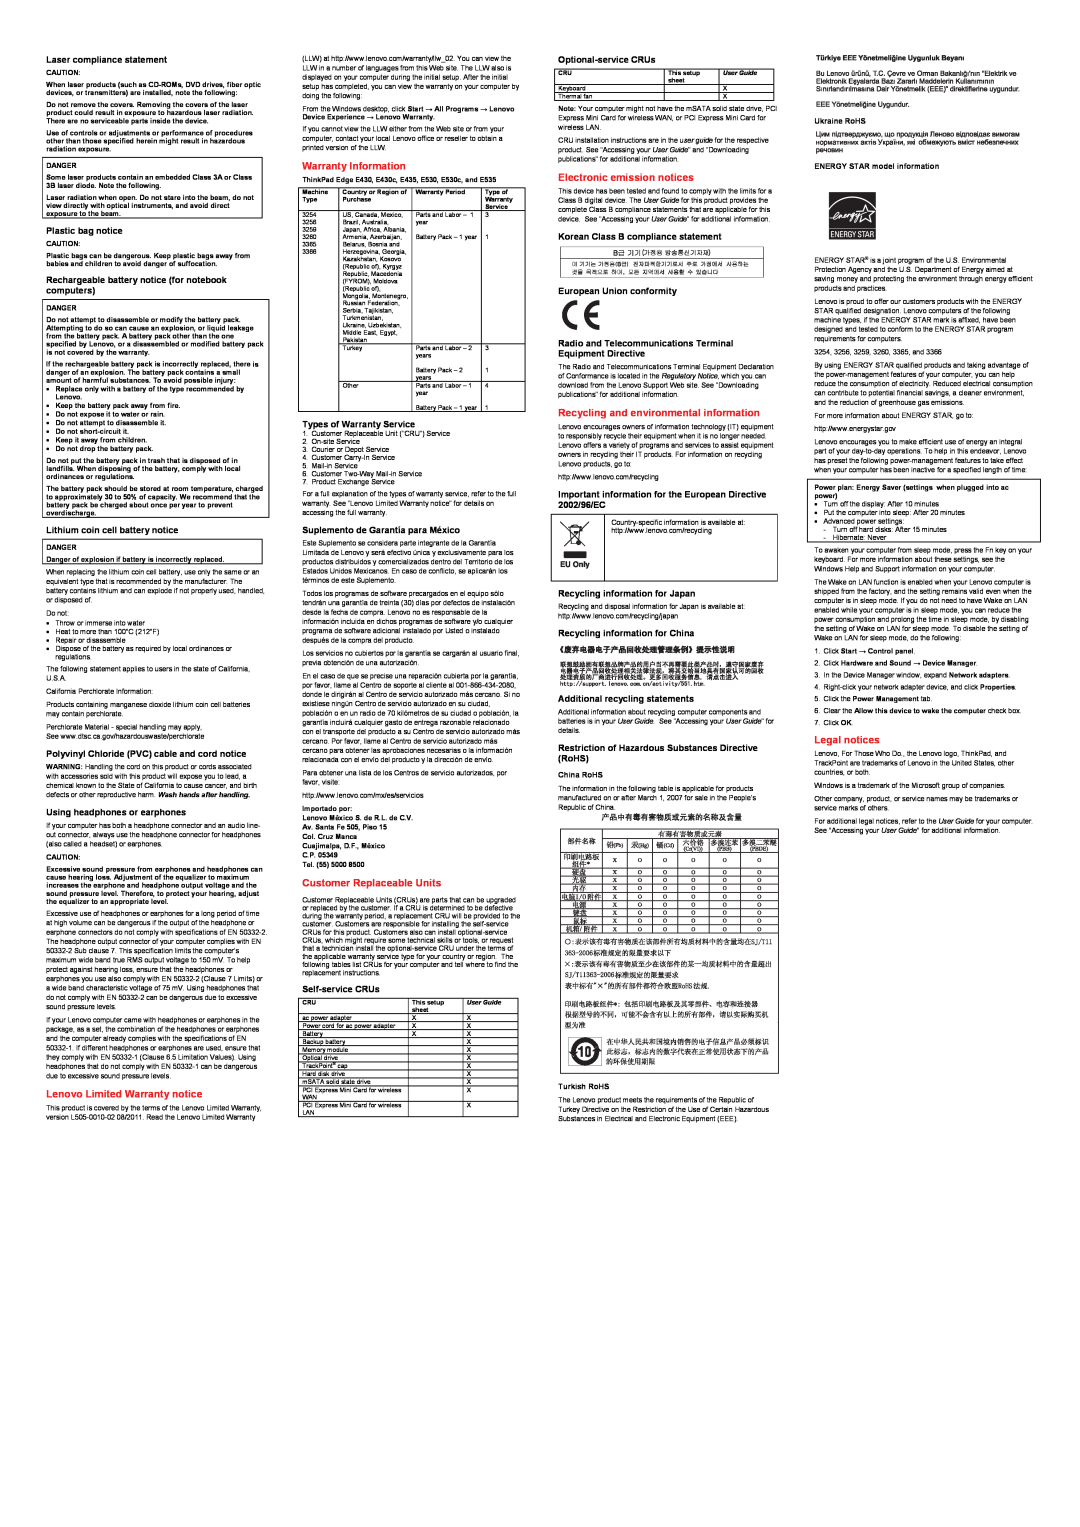 Lenovo E430C Lenovo Limited Warranty notice, Warranty Information, Customer Replaceable Units, Electronic emission notices 